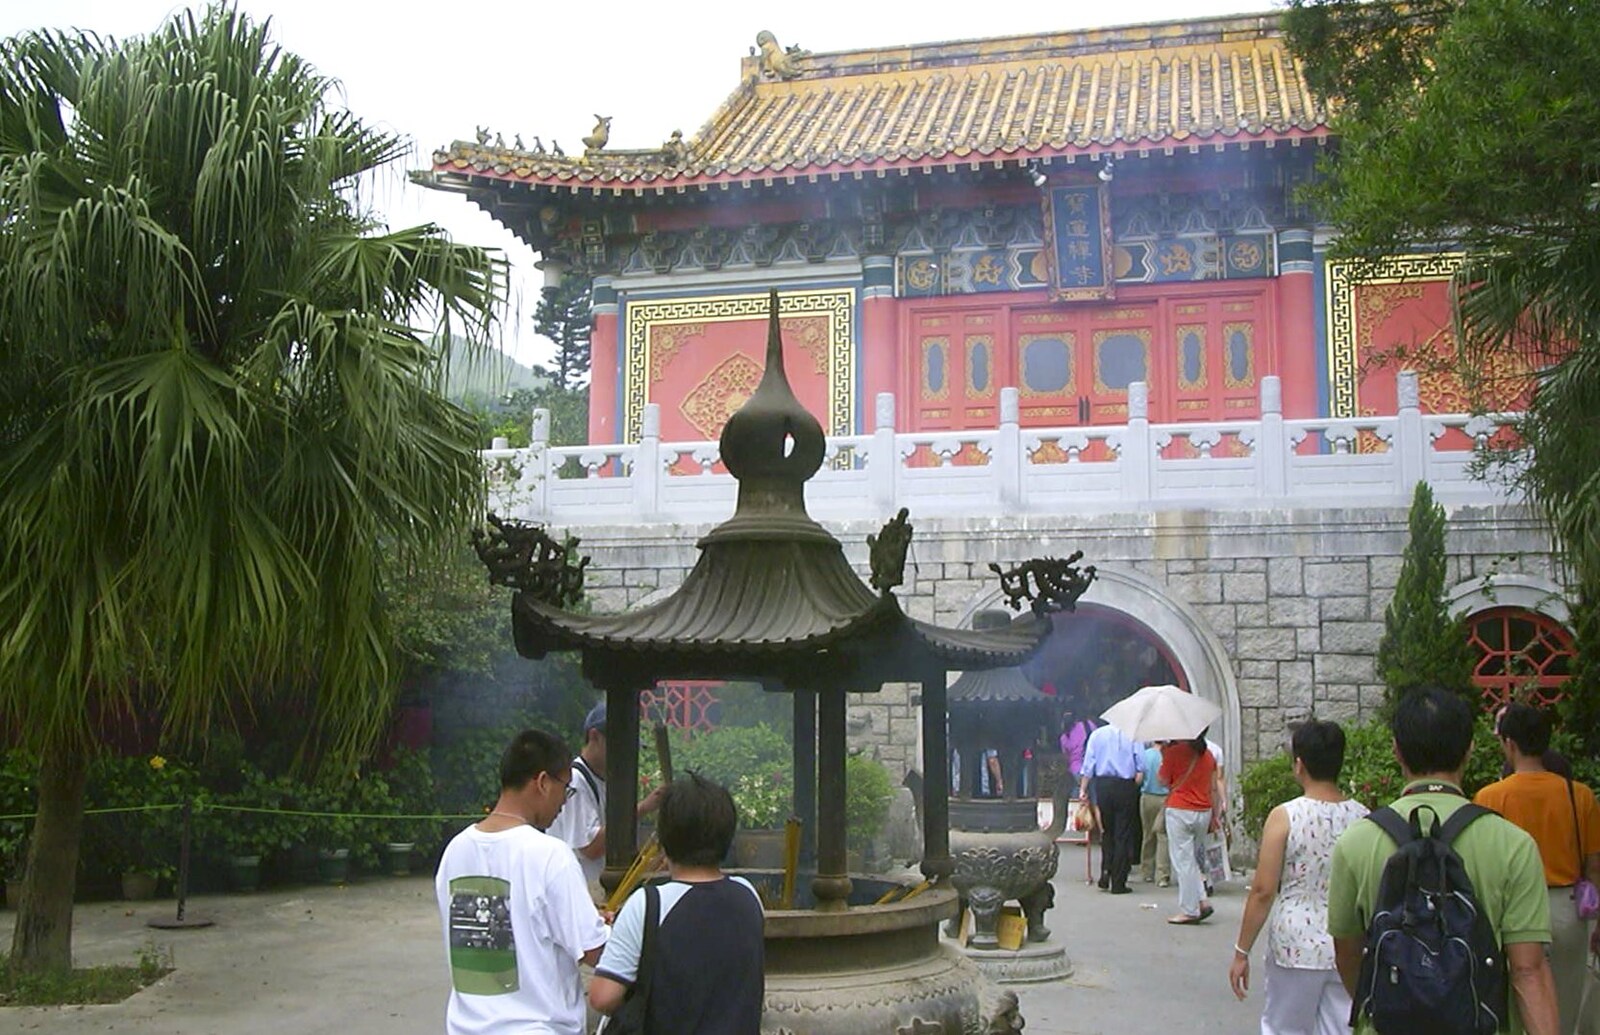 Lantau Island and the Po Lin Monastery, Hong Kong, China - 14th August 2001: Another incense burner